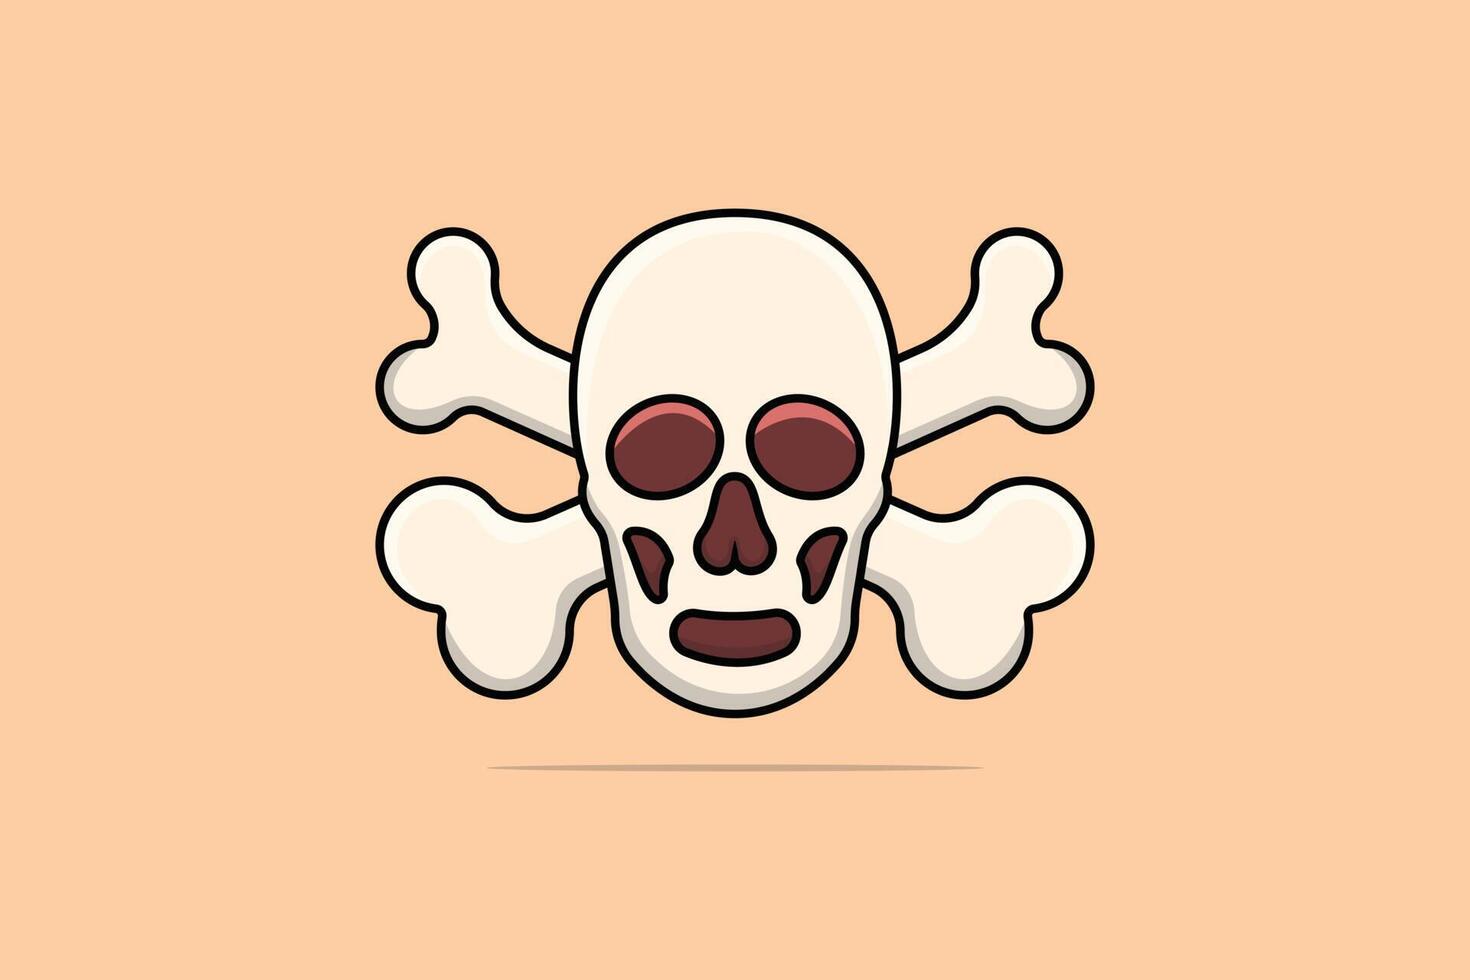 Skull Head With Crossbones vector illustration. Dead body head icon concept. Human skull and bones vector design on light orange background with shadow.